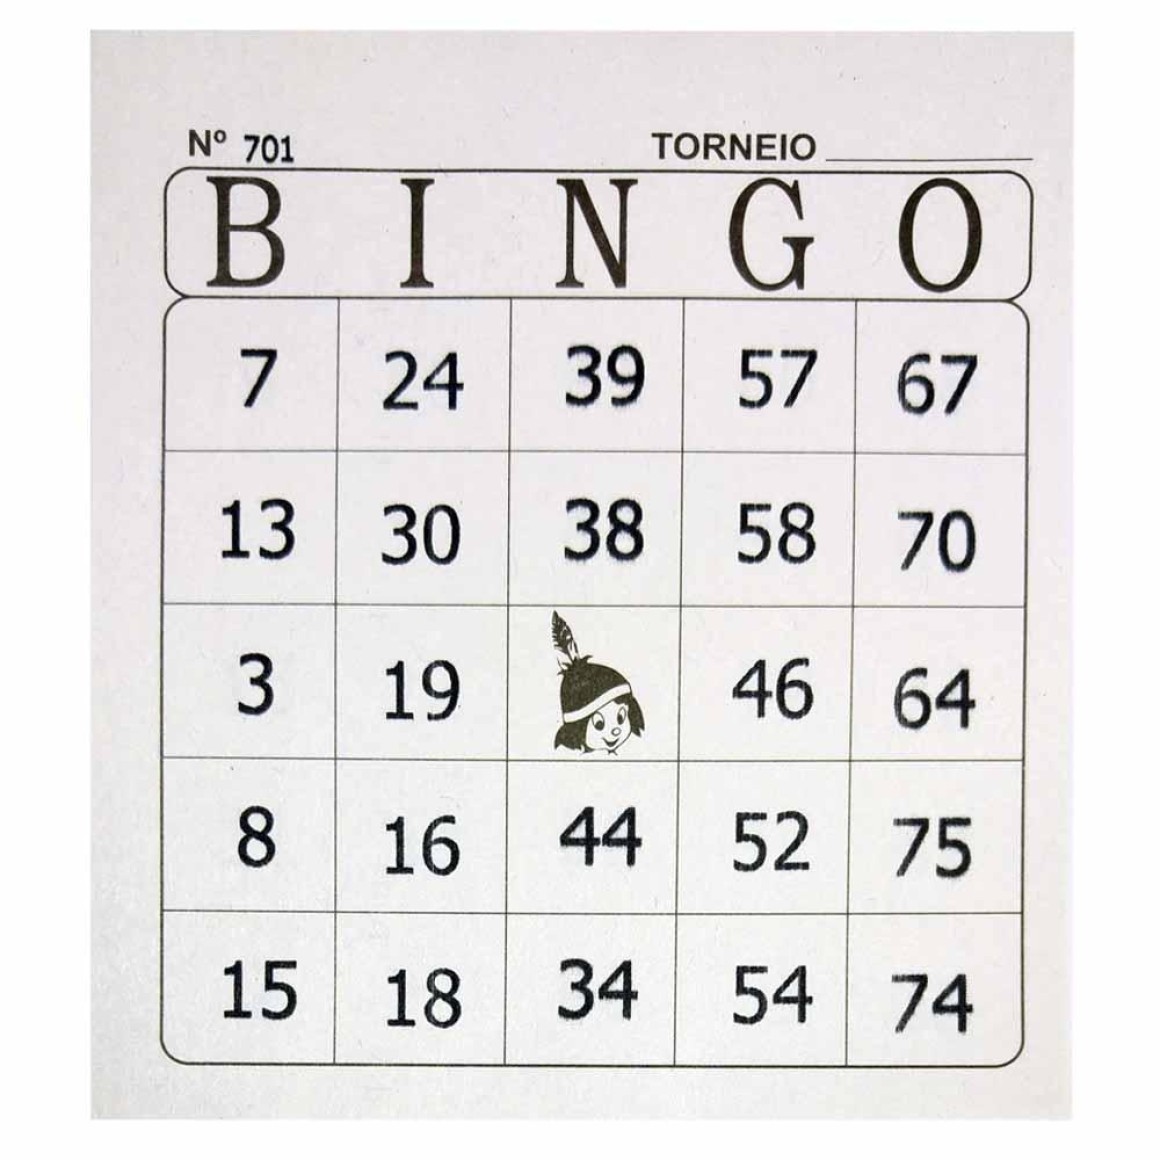 bonus bingo online casino